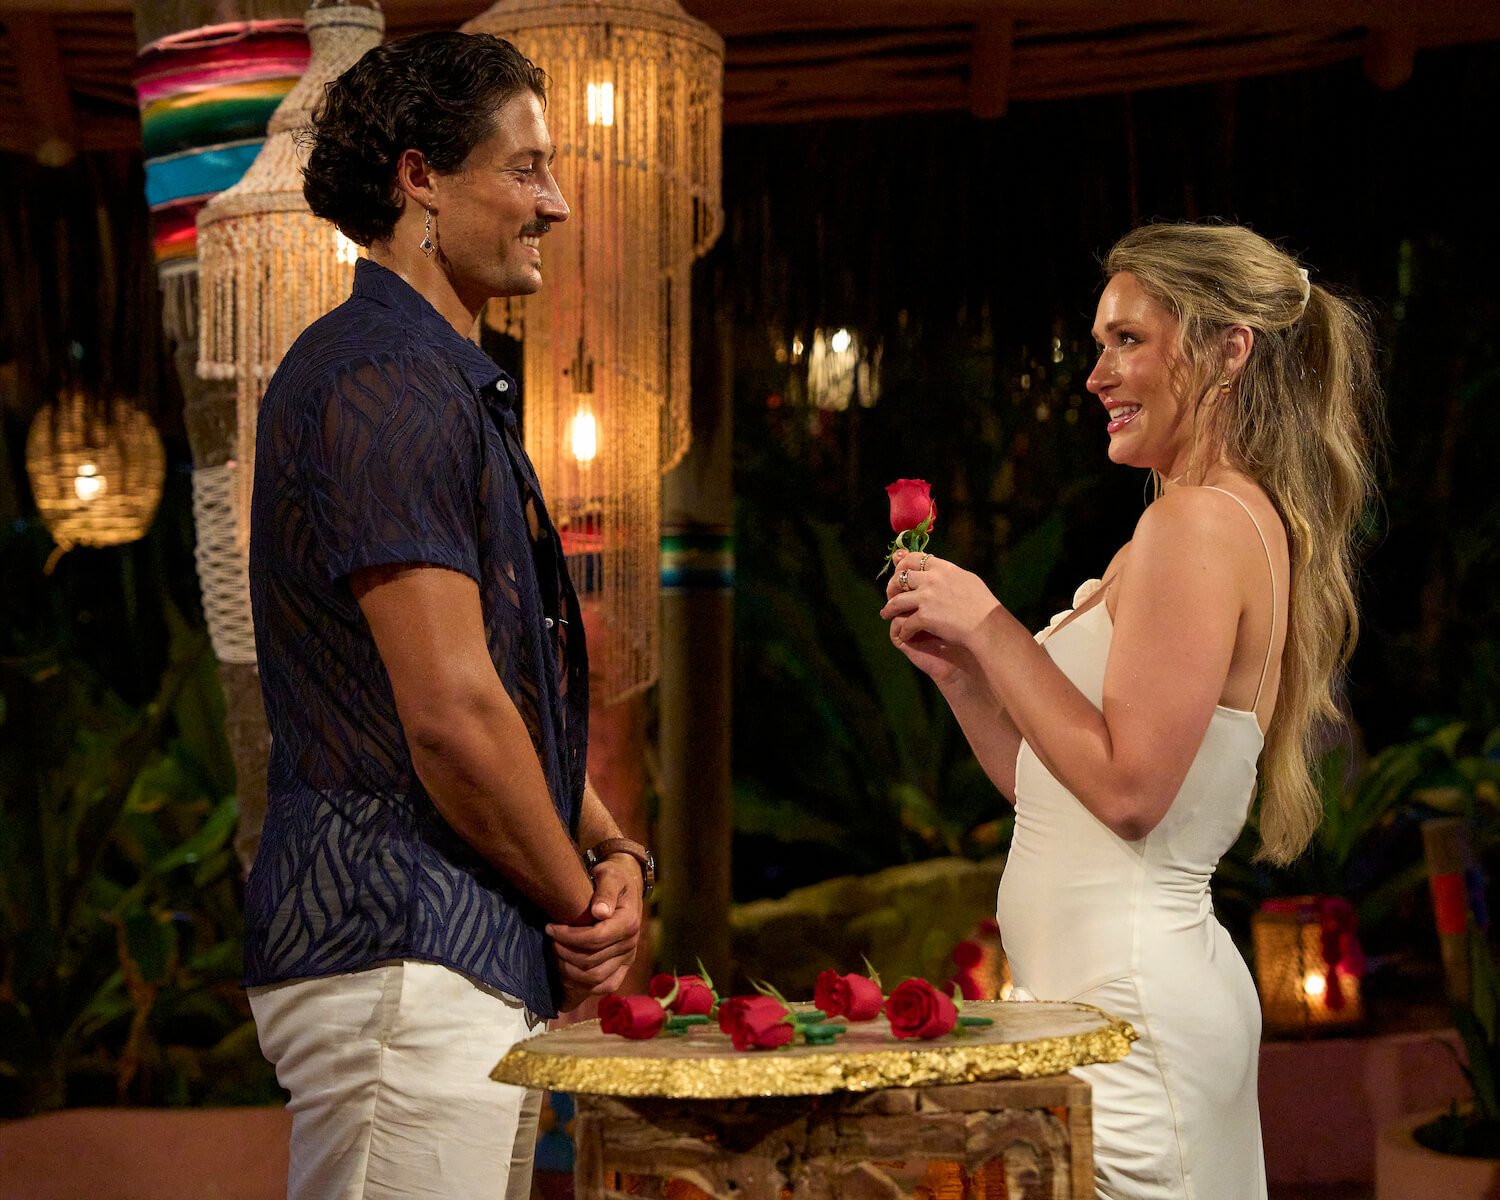 Rachel Recchia giving Brayden Bowers a rose in 'Bachelor in Paradise' Season 9